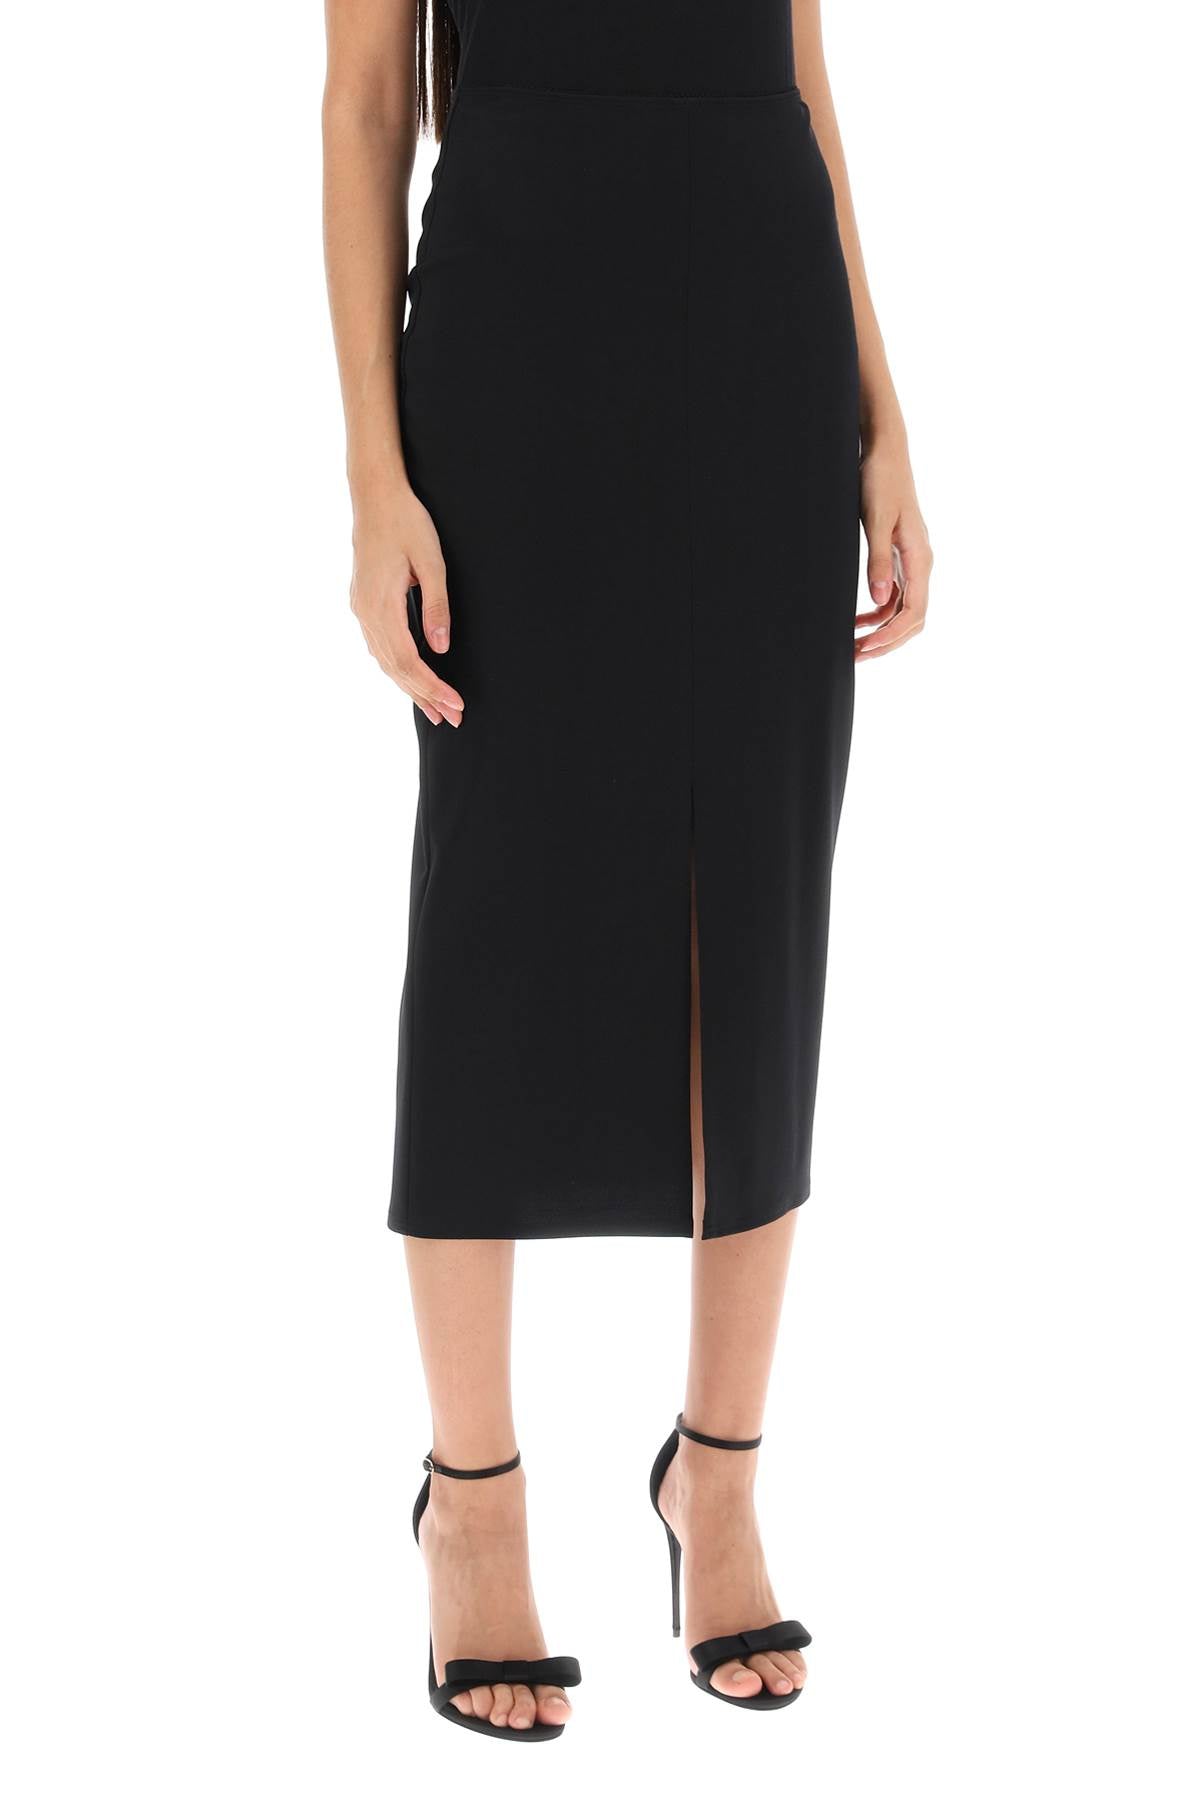 DOLCE & GABBANA Elegant Milan-Stitch Pencil Skirt for Women - FW23 Collection